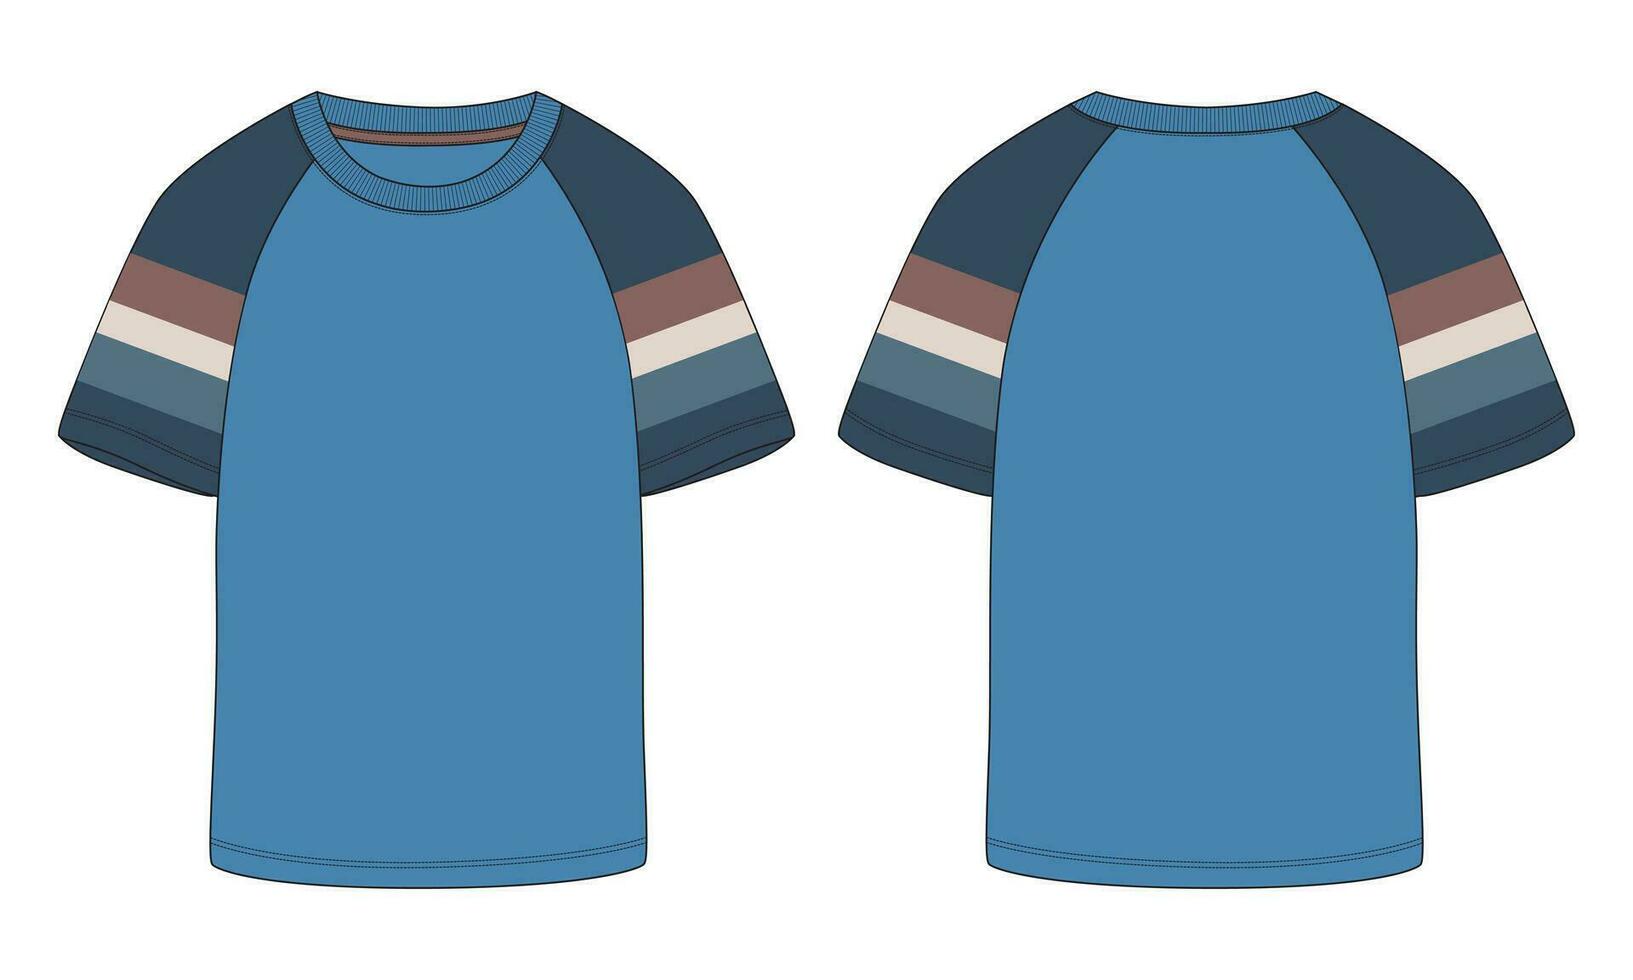 Short sleeve Raglan T shirt technical fashion flat sketch vector Illustration template front, back views